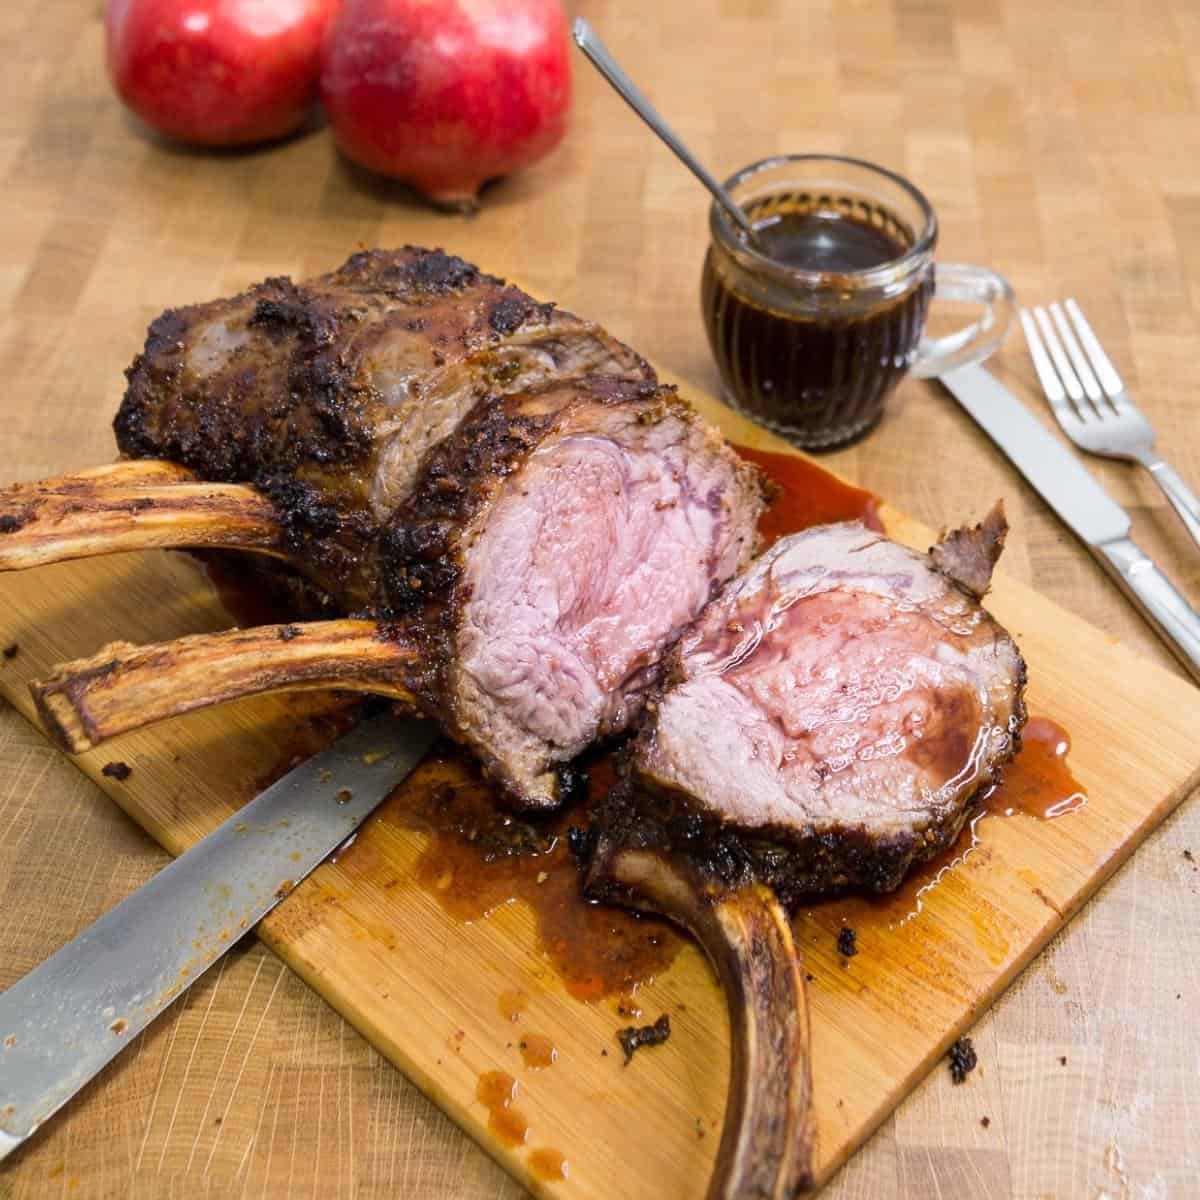 Sliced roasted rib roast on a wooden board.